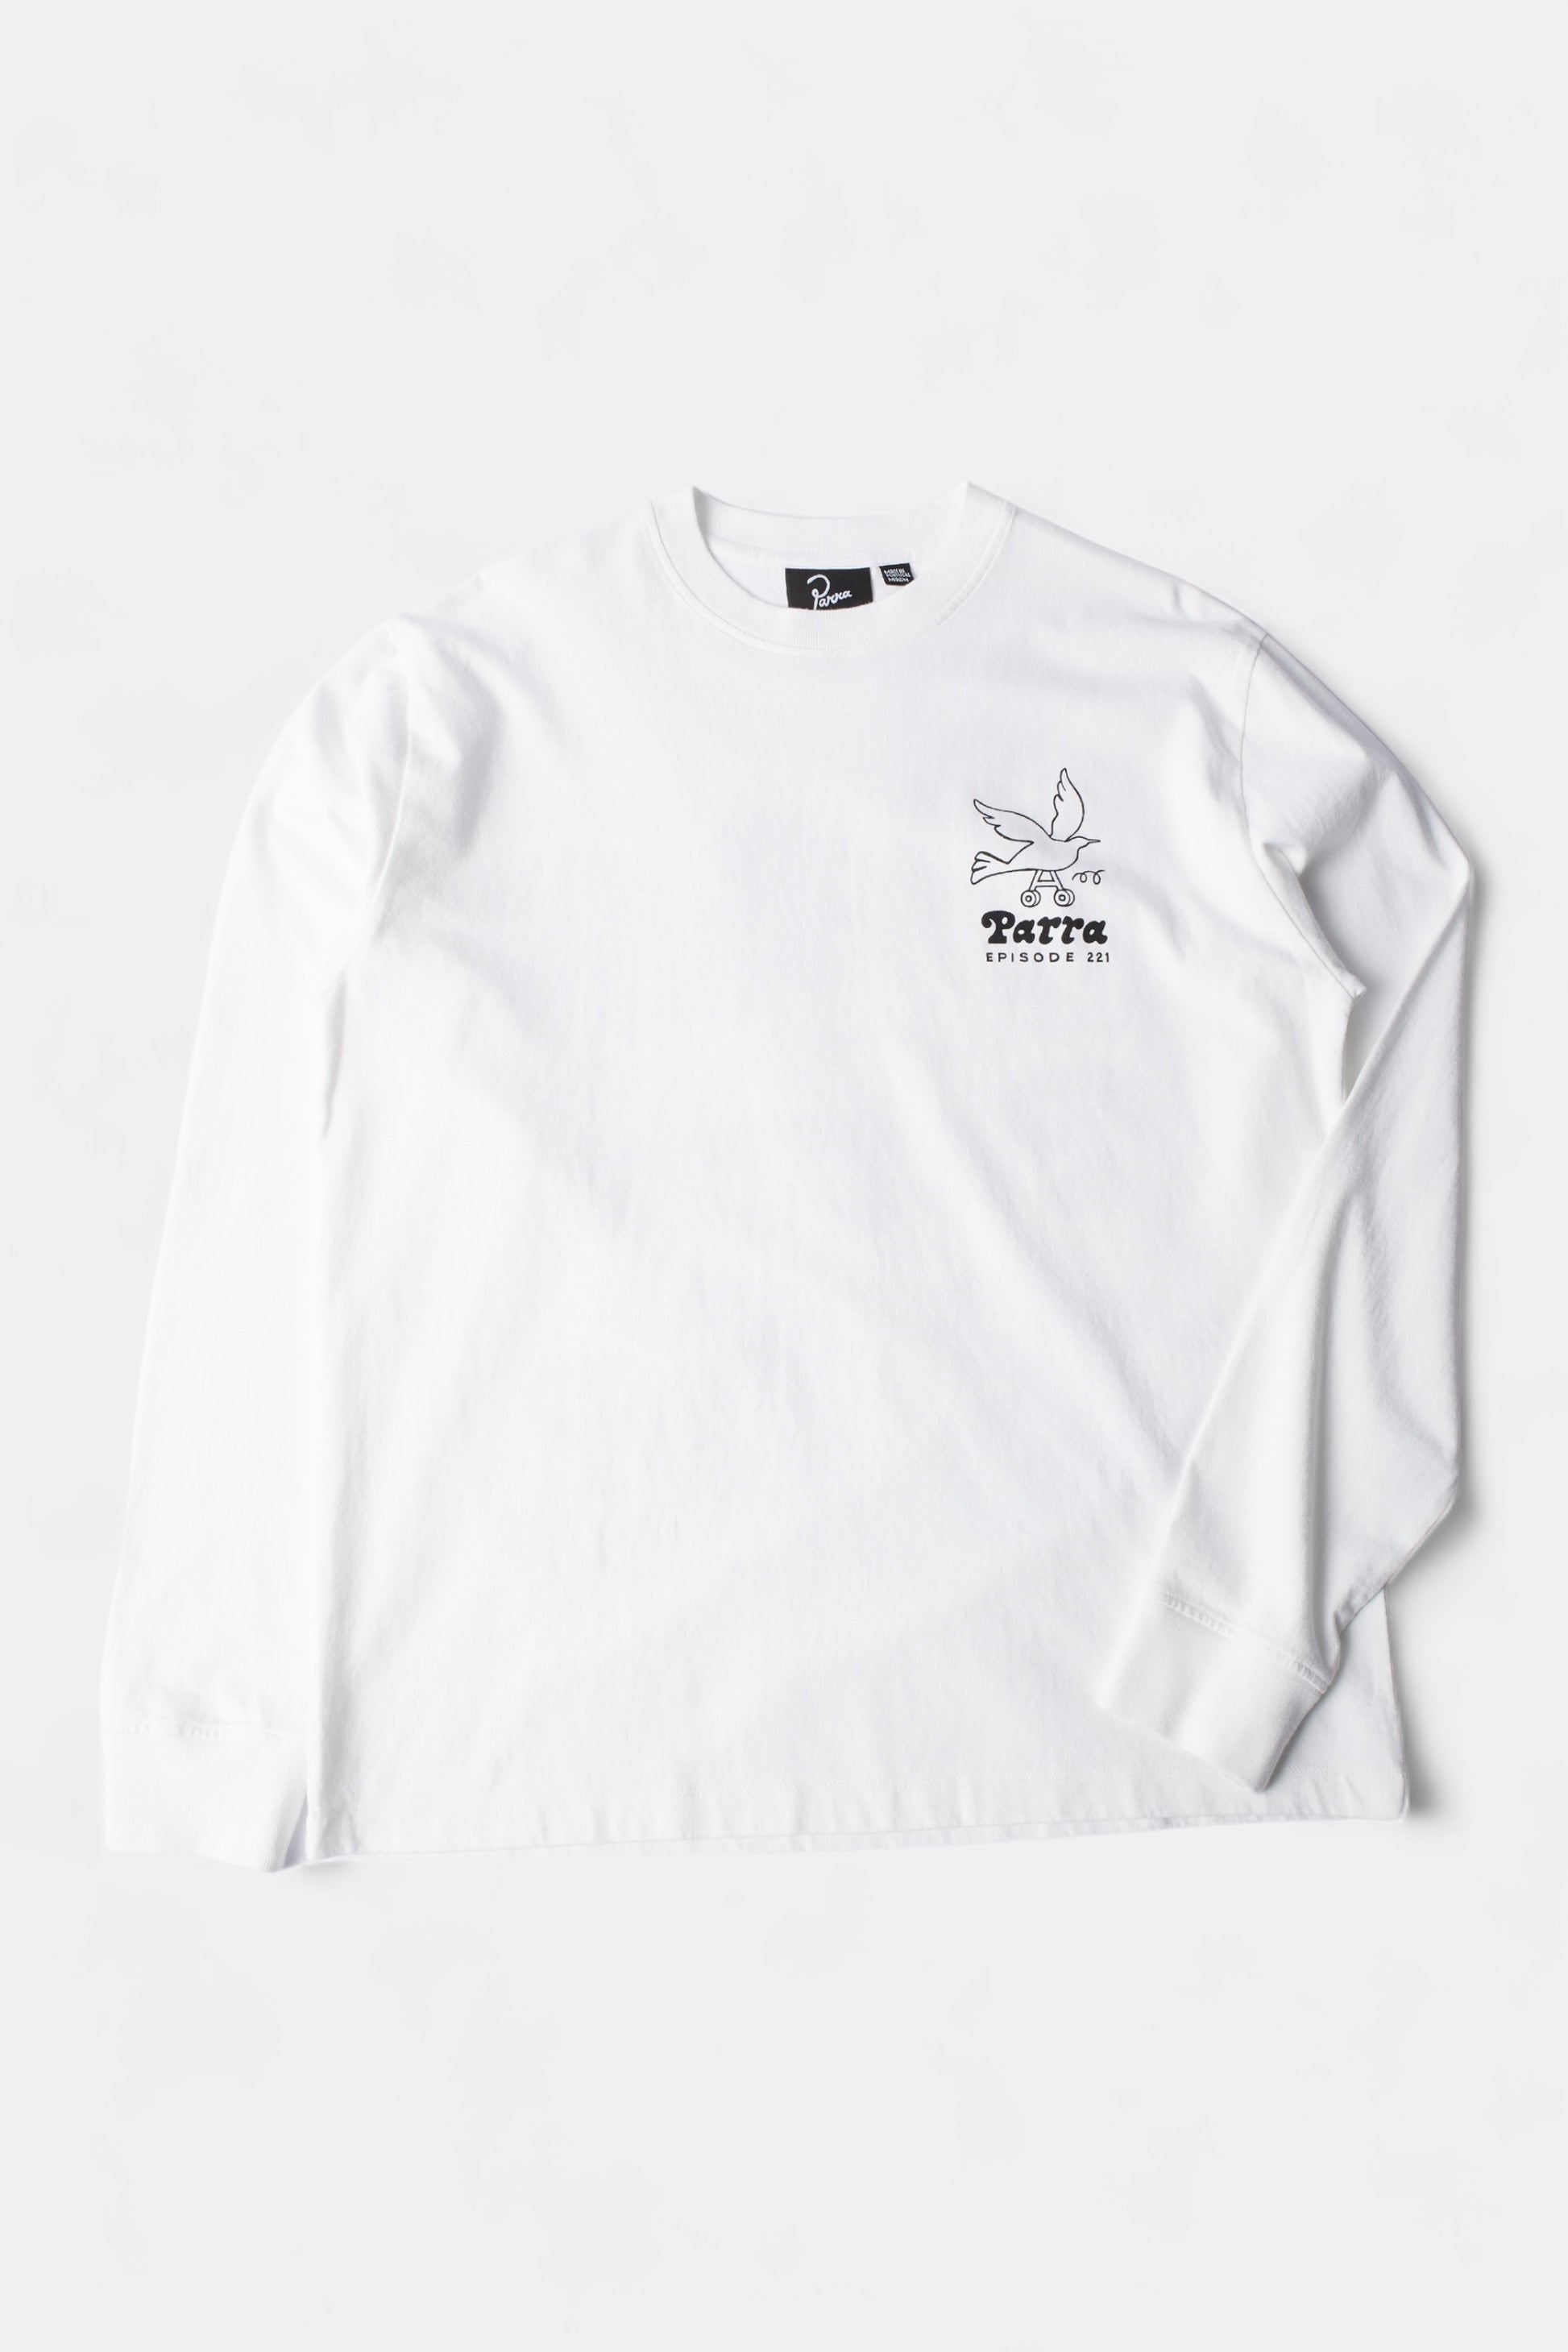 Parra - Chair Pencil Long Sleeve T-Shirt (White)